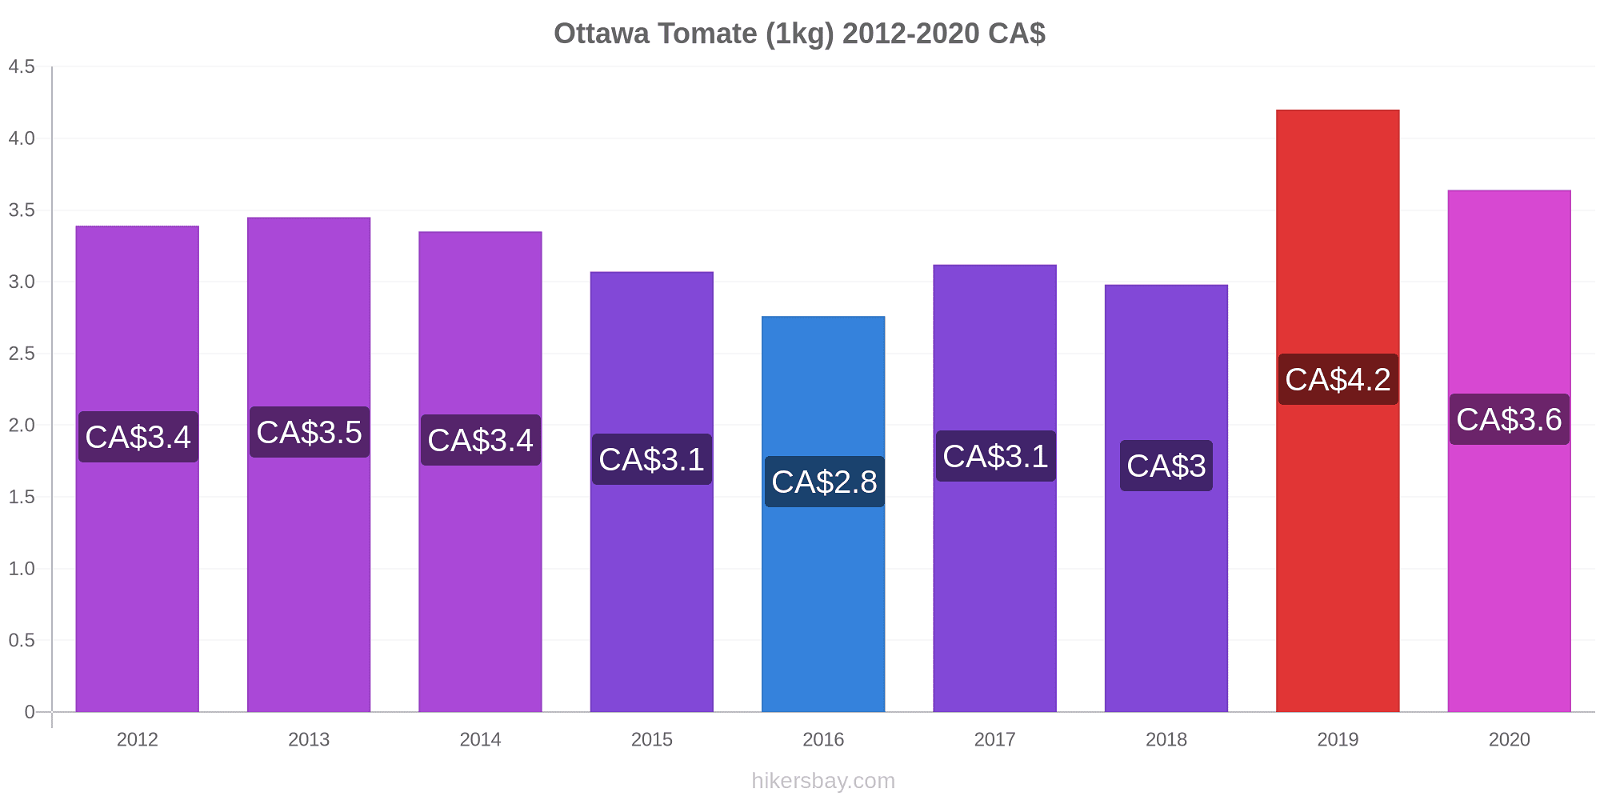 Ottawa changements de prix Tomate (1kg) hikersbay.com